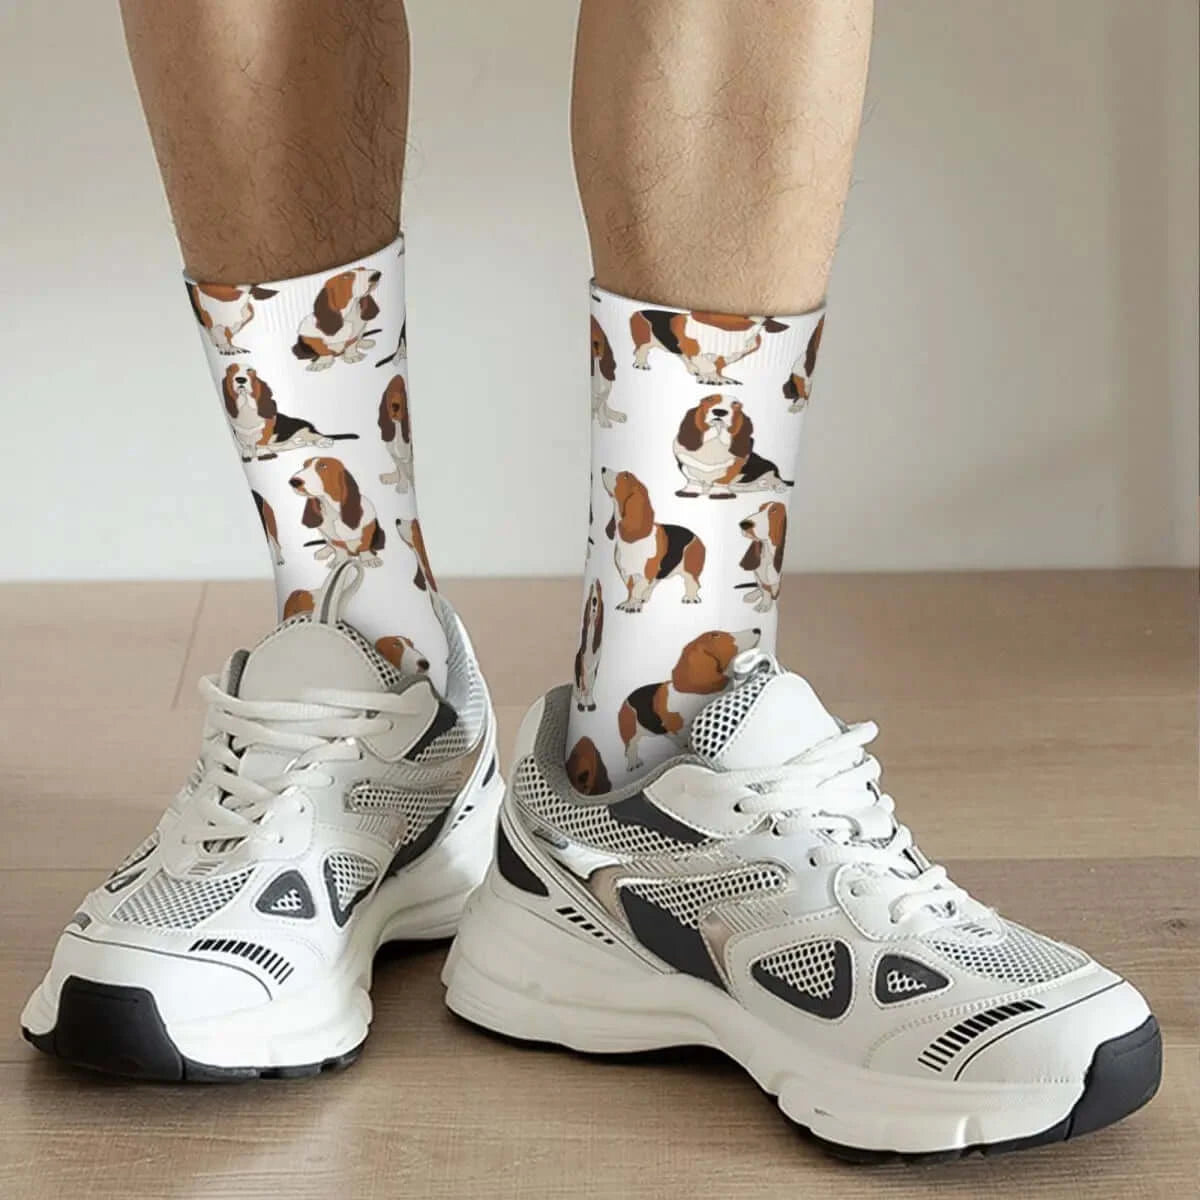 Basset Hound Dog Crew Socks